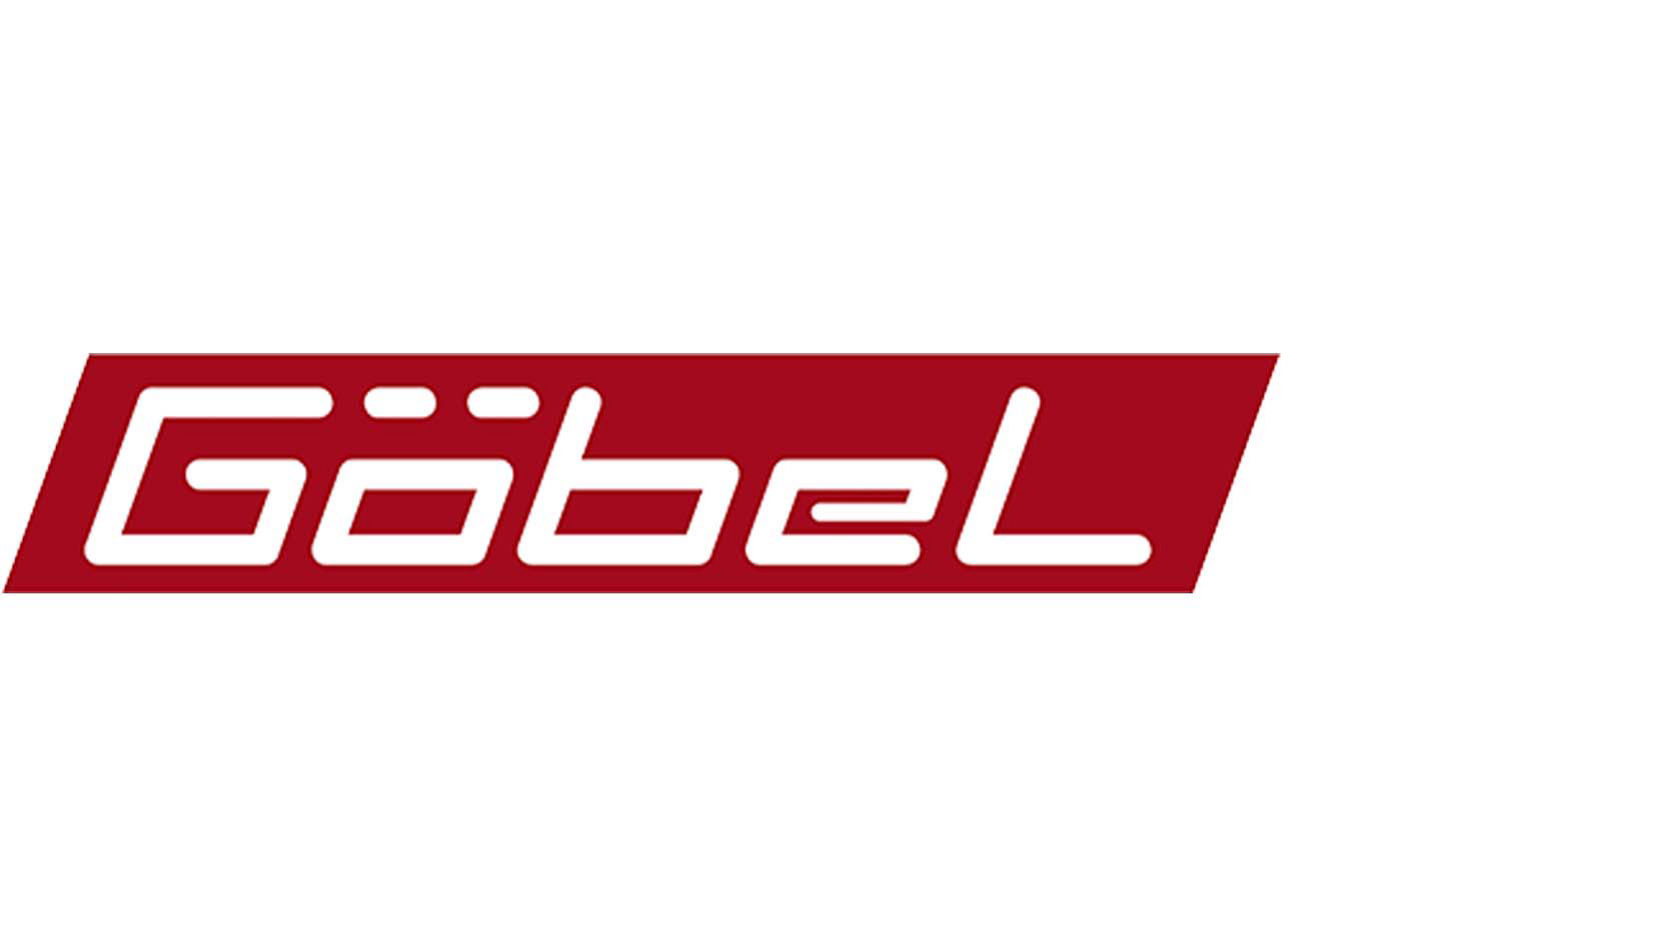 B. Göbel & Sohn GmbH Fahrzeug- u. Karosseriebau